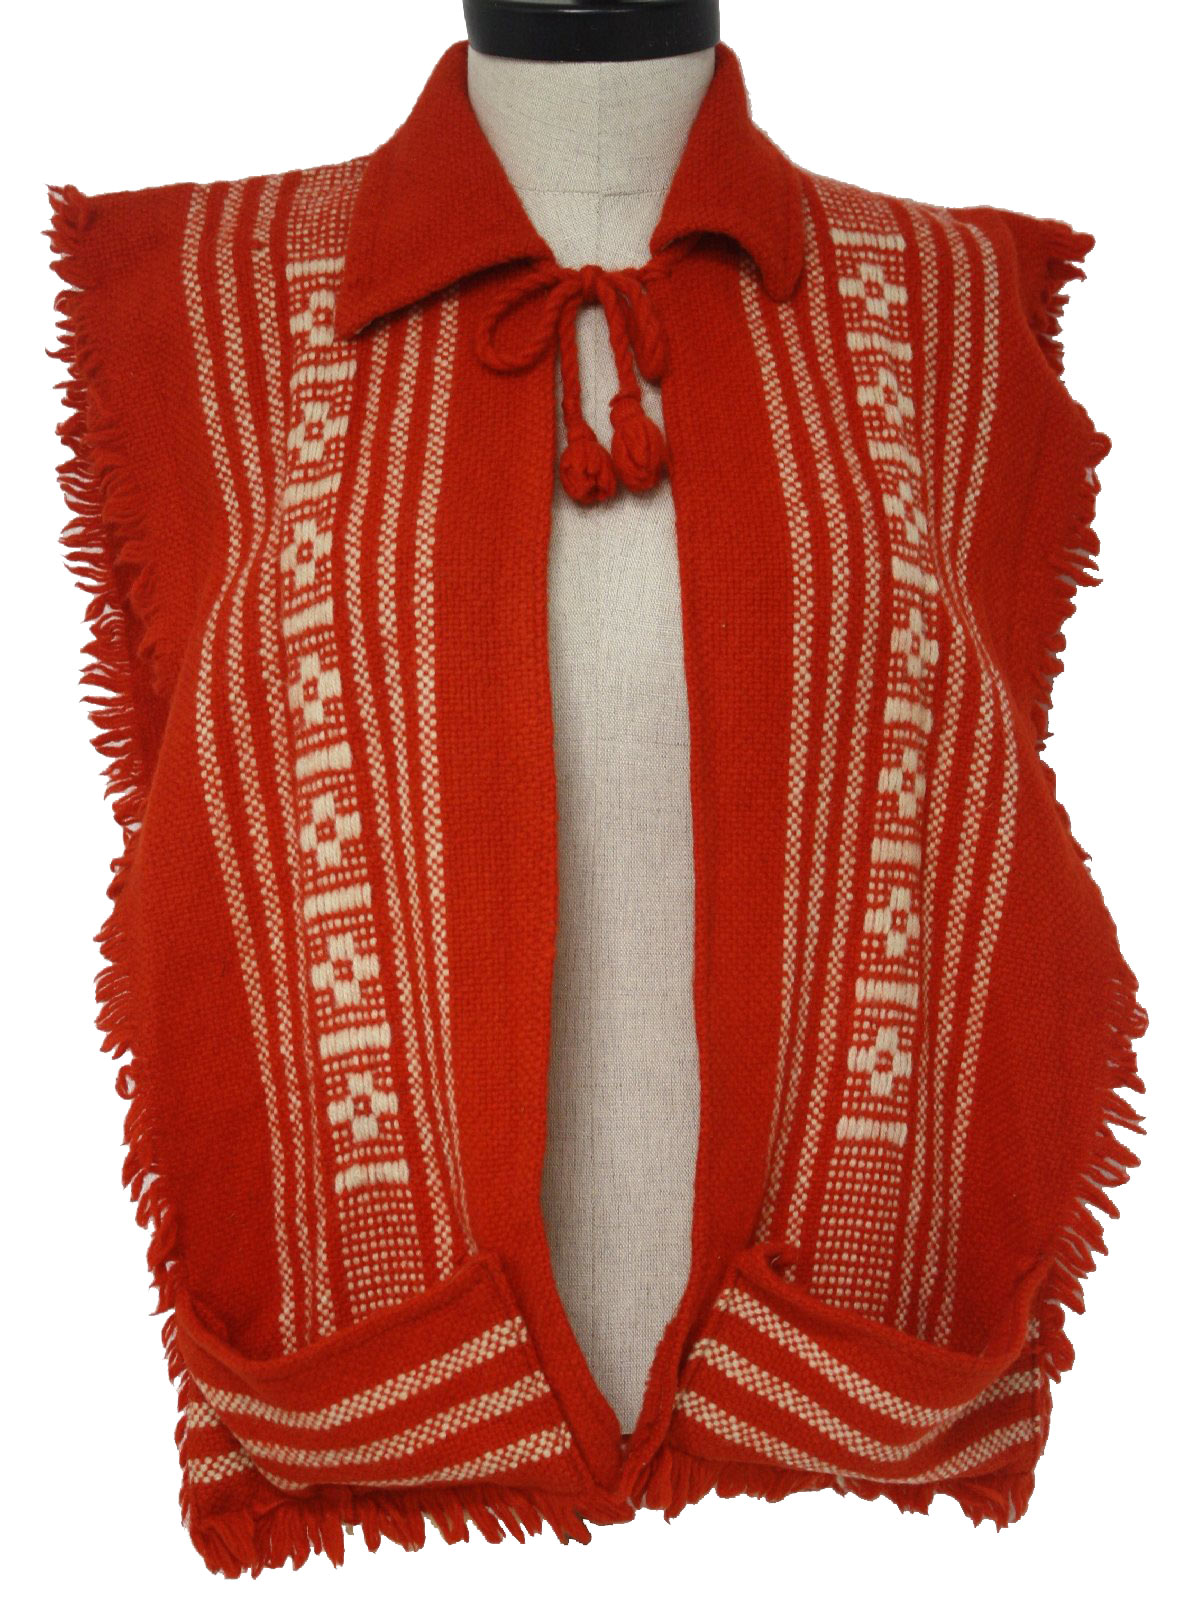 Download Retro 1970's Vest: 70s -no label- Womens red and white ...